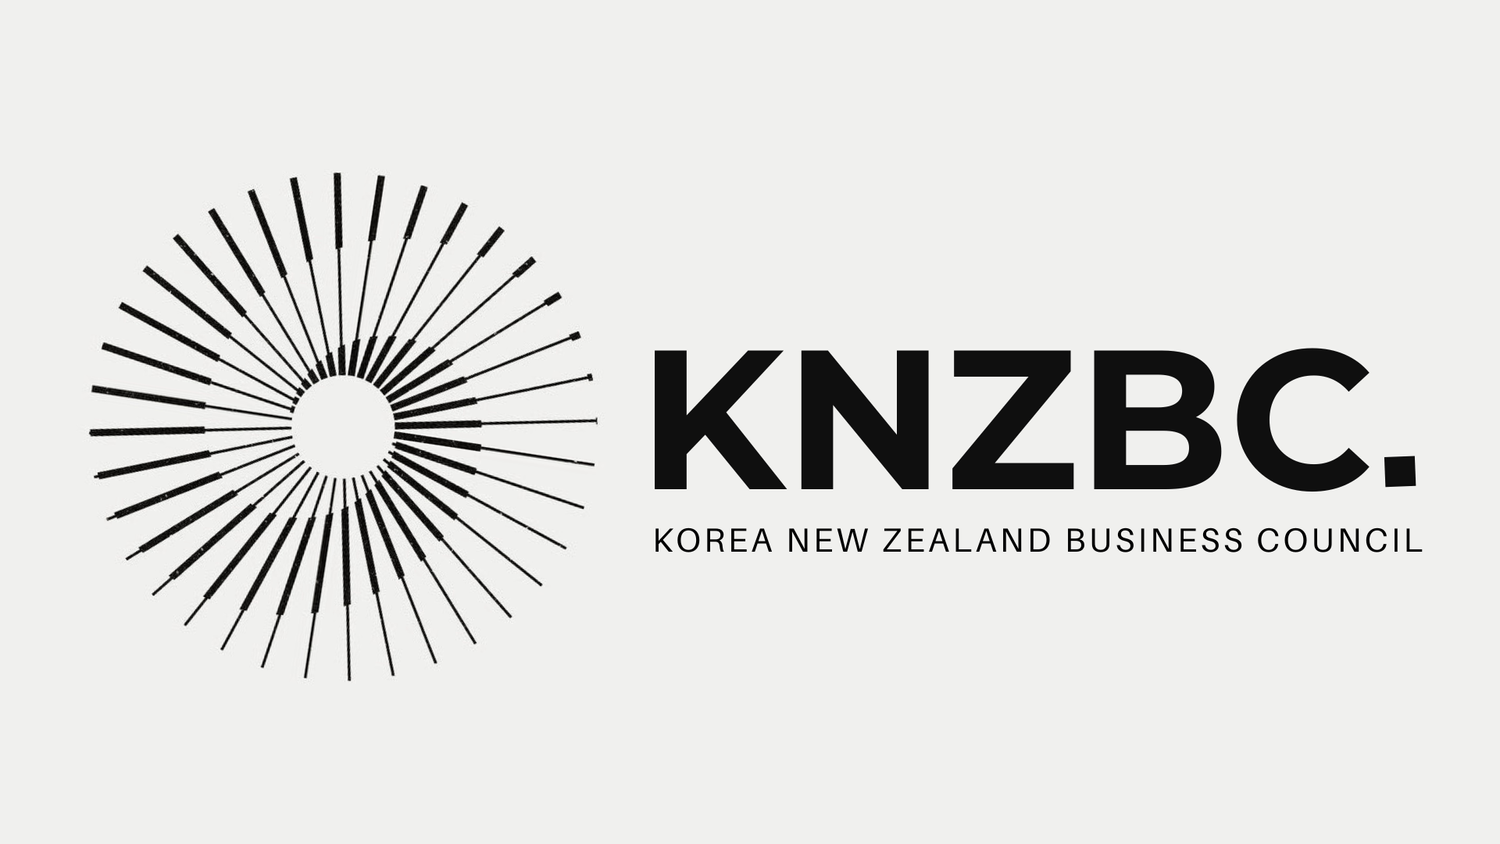 Korea New Zealand Business Council